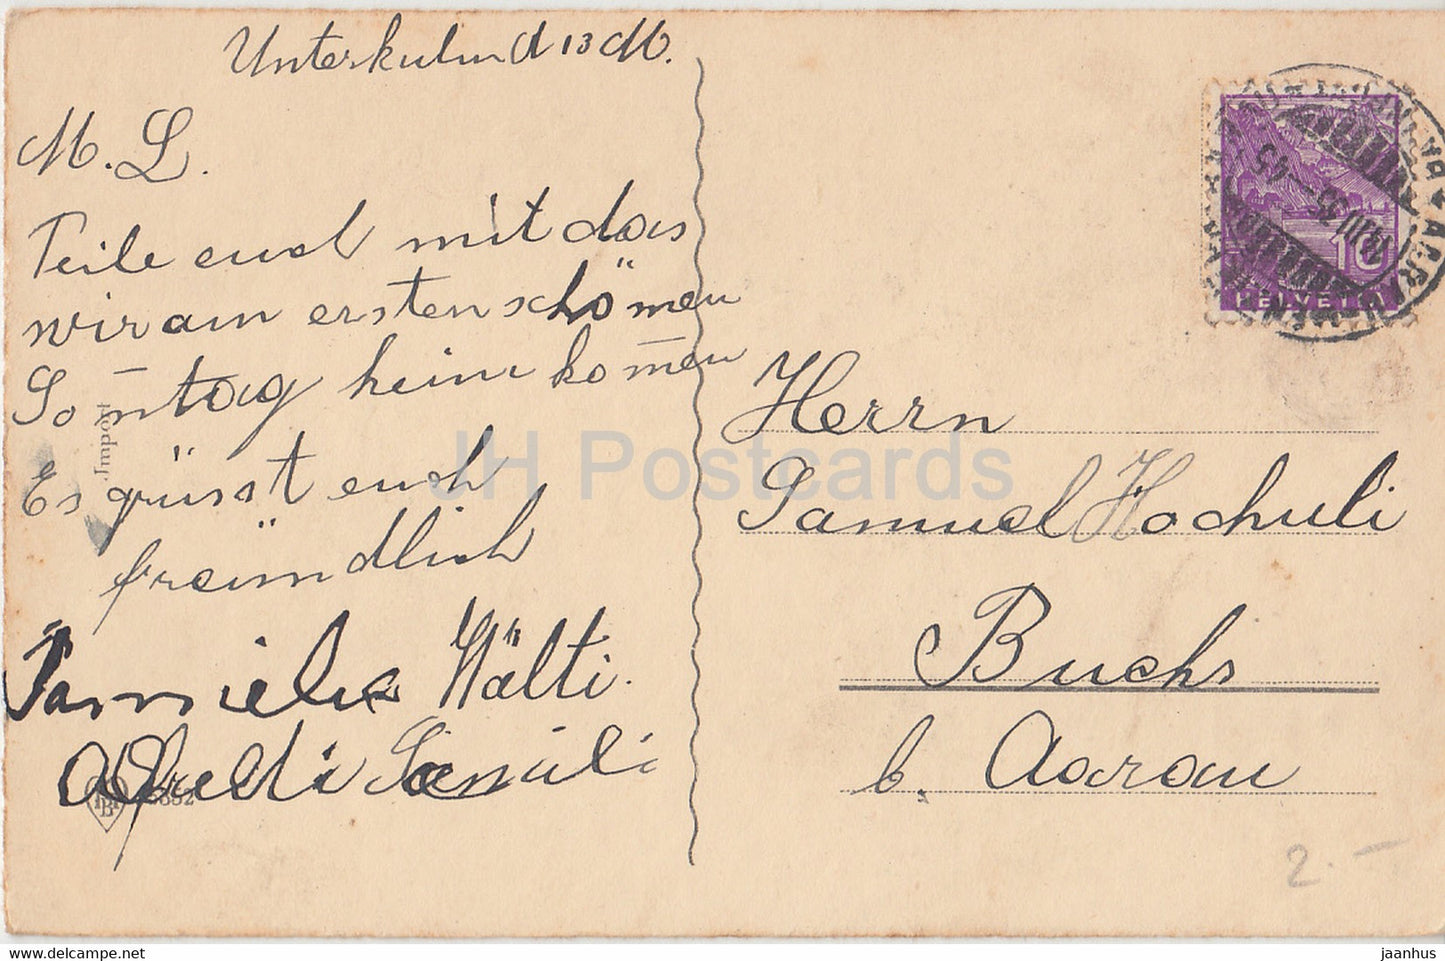 Carte de vœux d’anniversaire - Die besten Wunsche zum Geburtstage - fille - fleurs - BR vieille carte postale - 1935 - Allemagne - utilisé